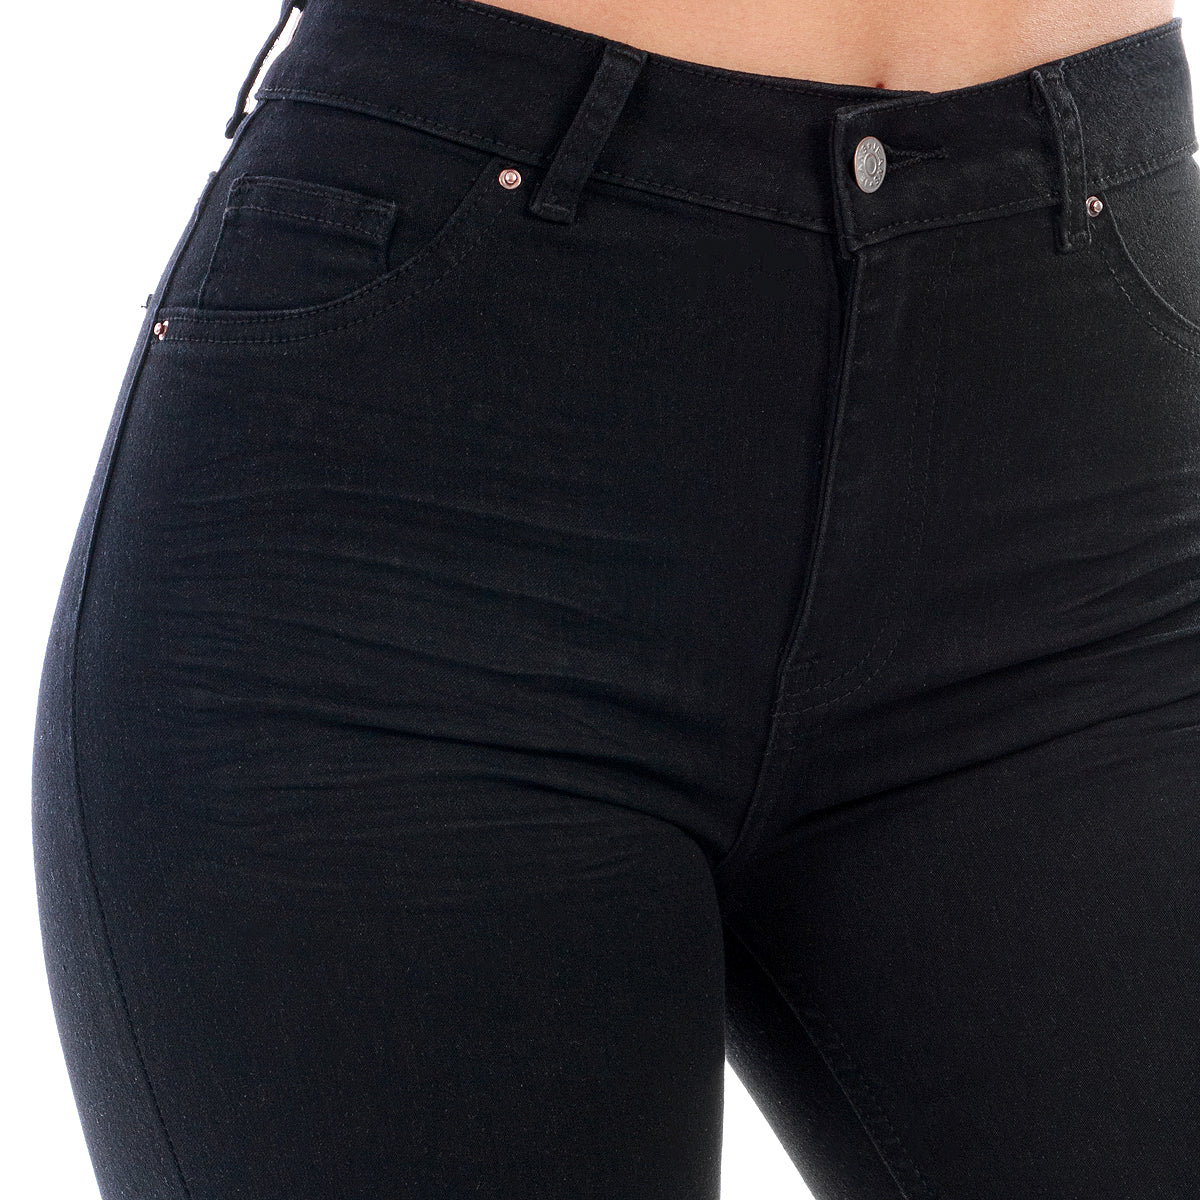 Pantalón Mezclilla Stretch Mujer Con Botones - Opp's Jeans – Opps Jeans